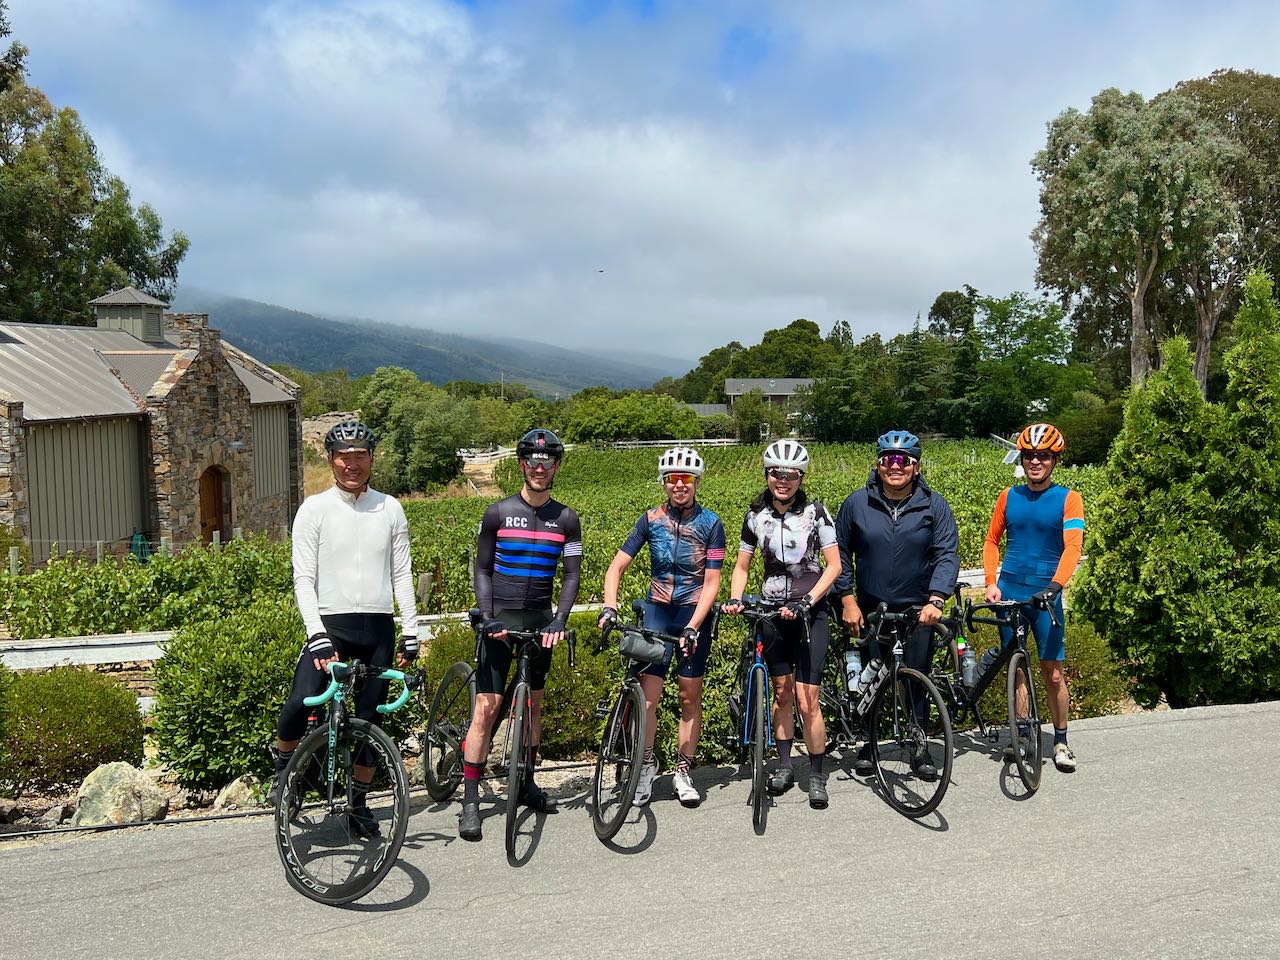 Rapha Cycling Club San Francisco group near Clos de la Tech in Redwood City, California